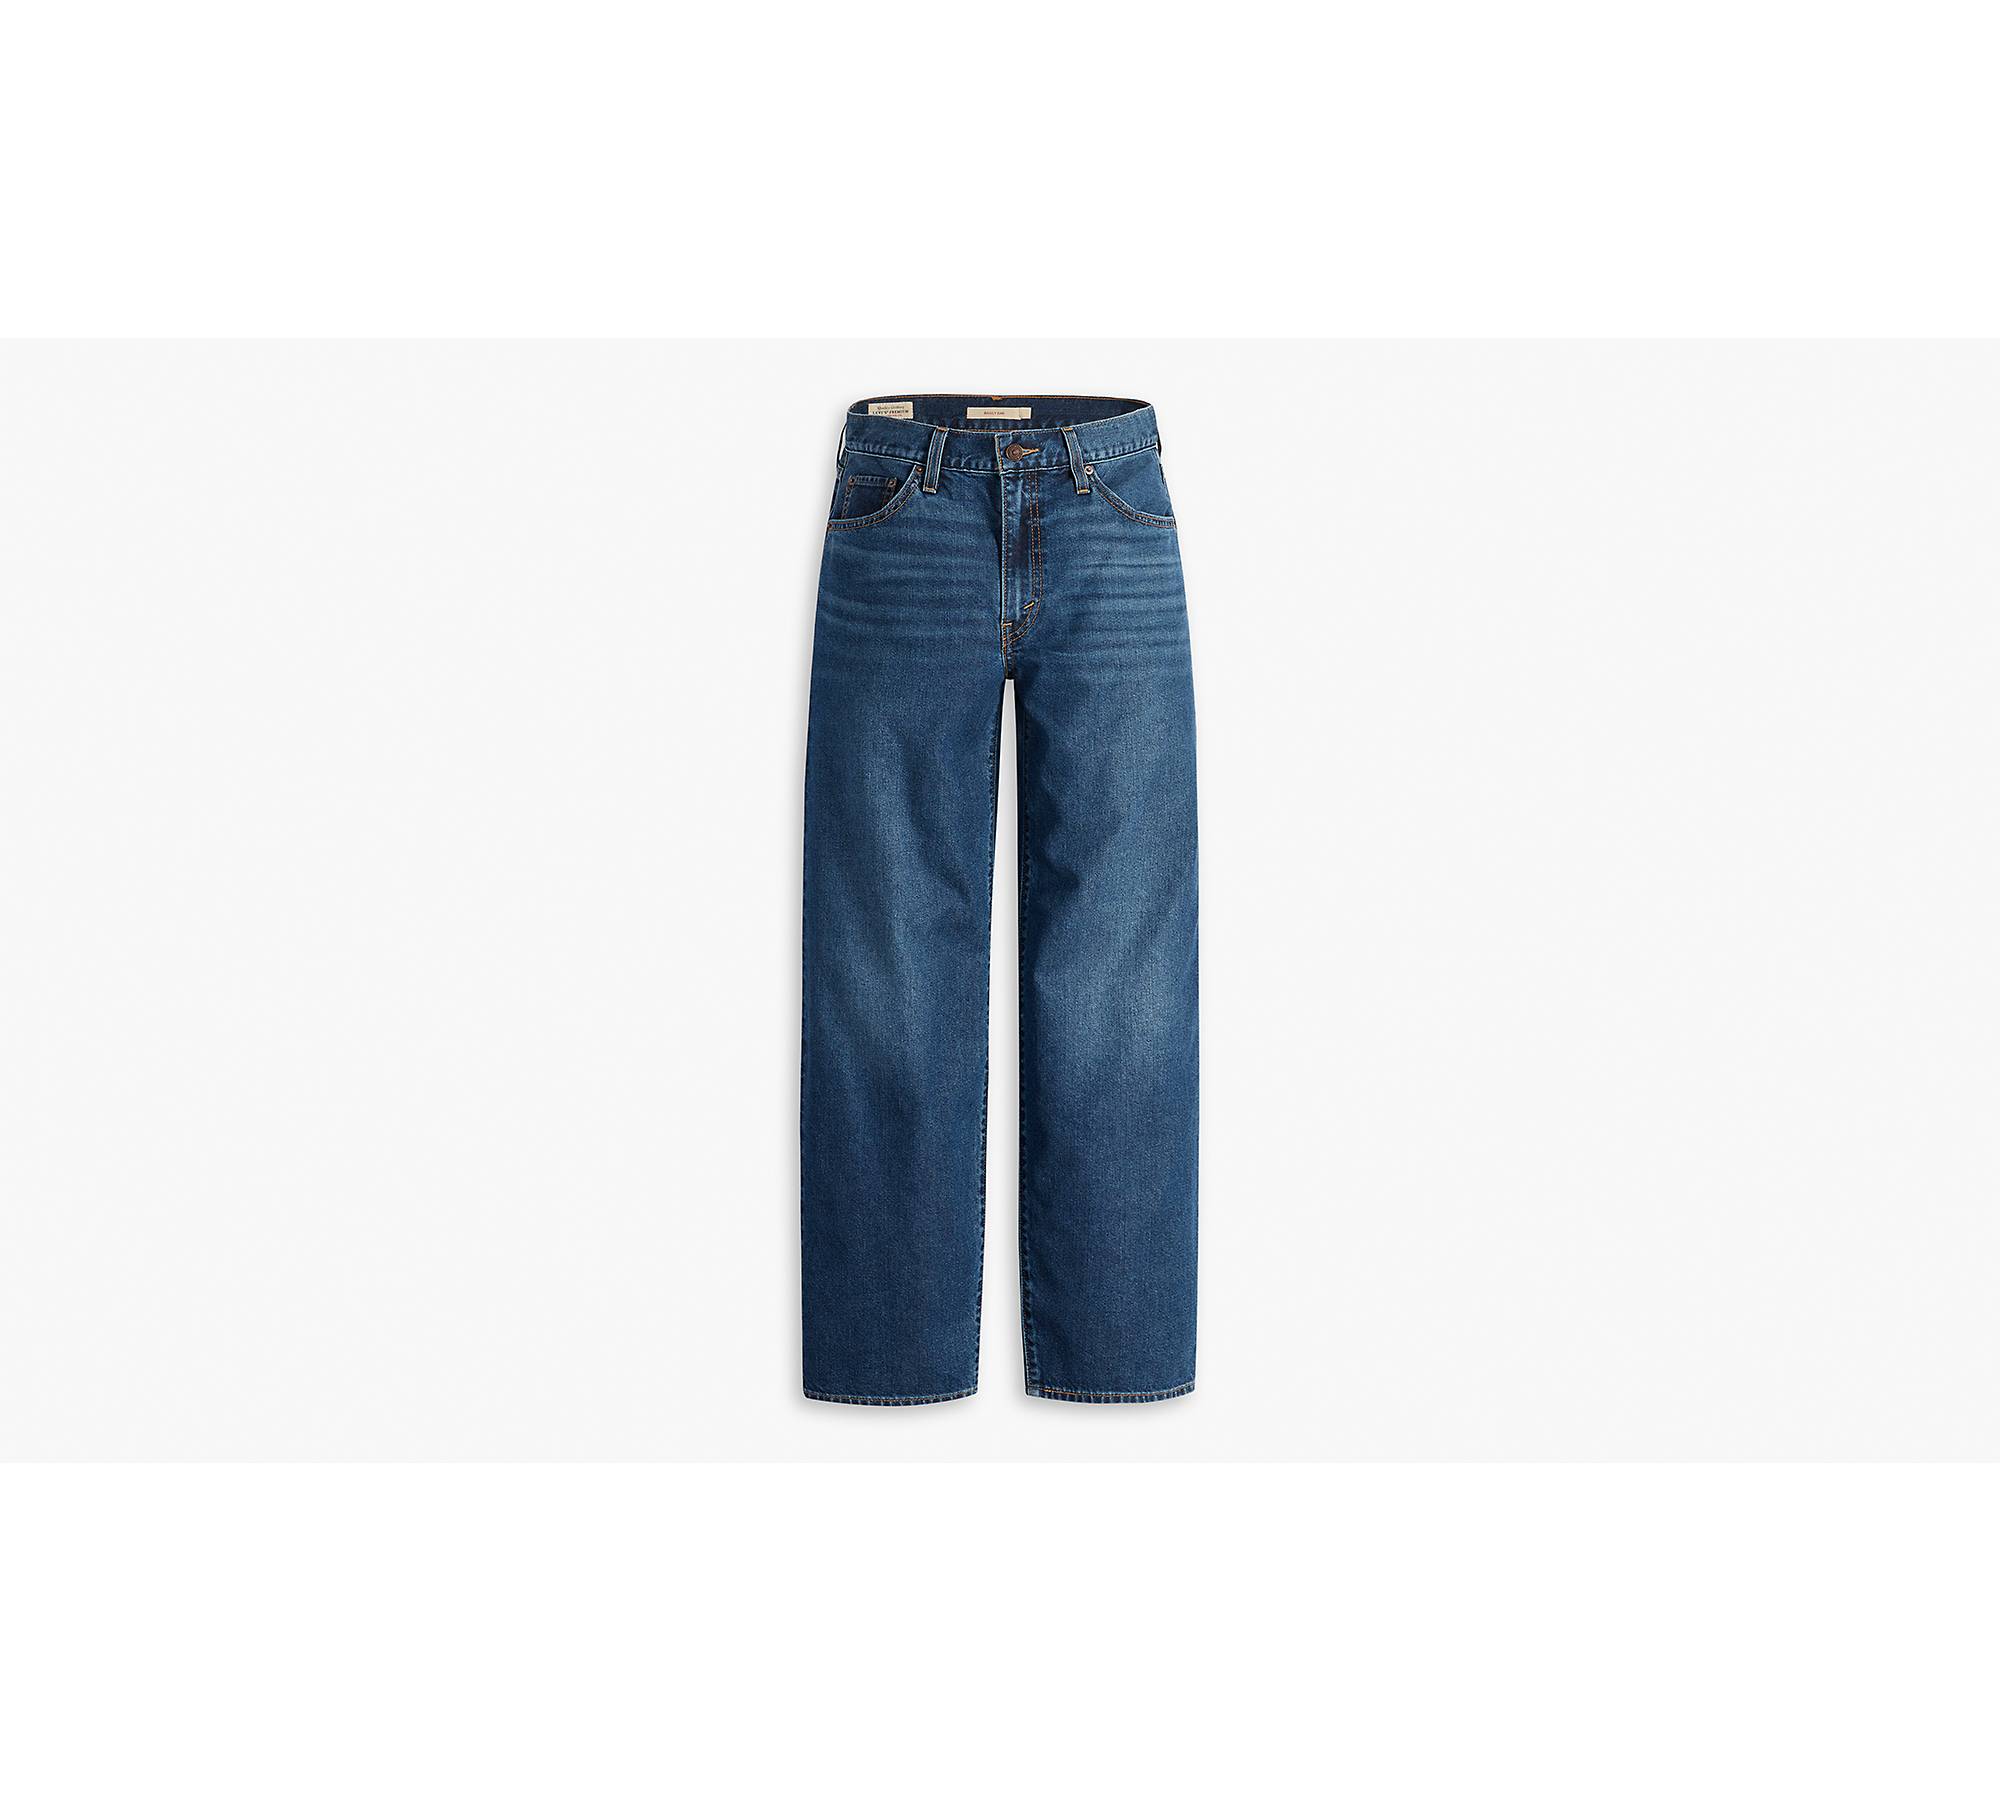 Gap Mens Blue Denim Skinny Jeans Size 32/30 - beyond exchange